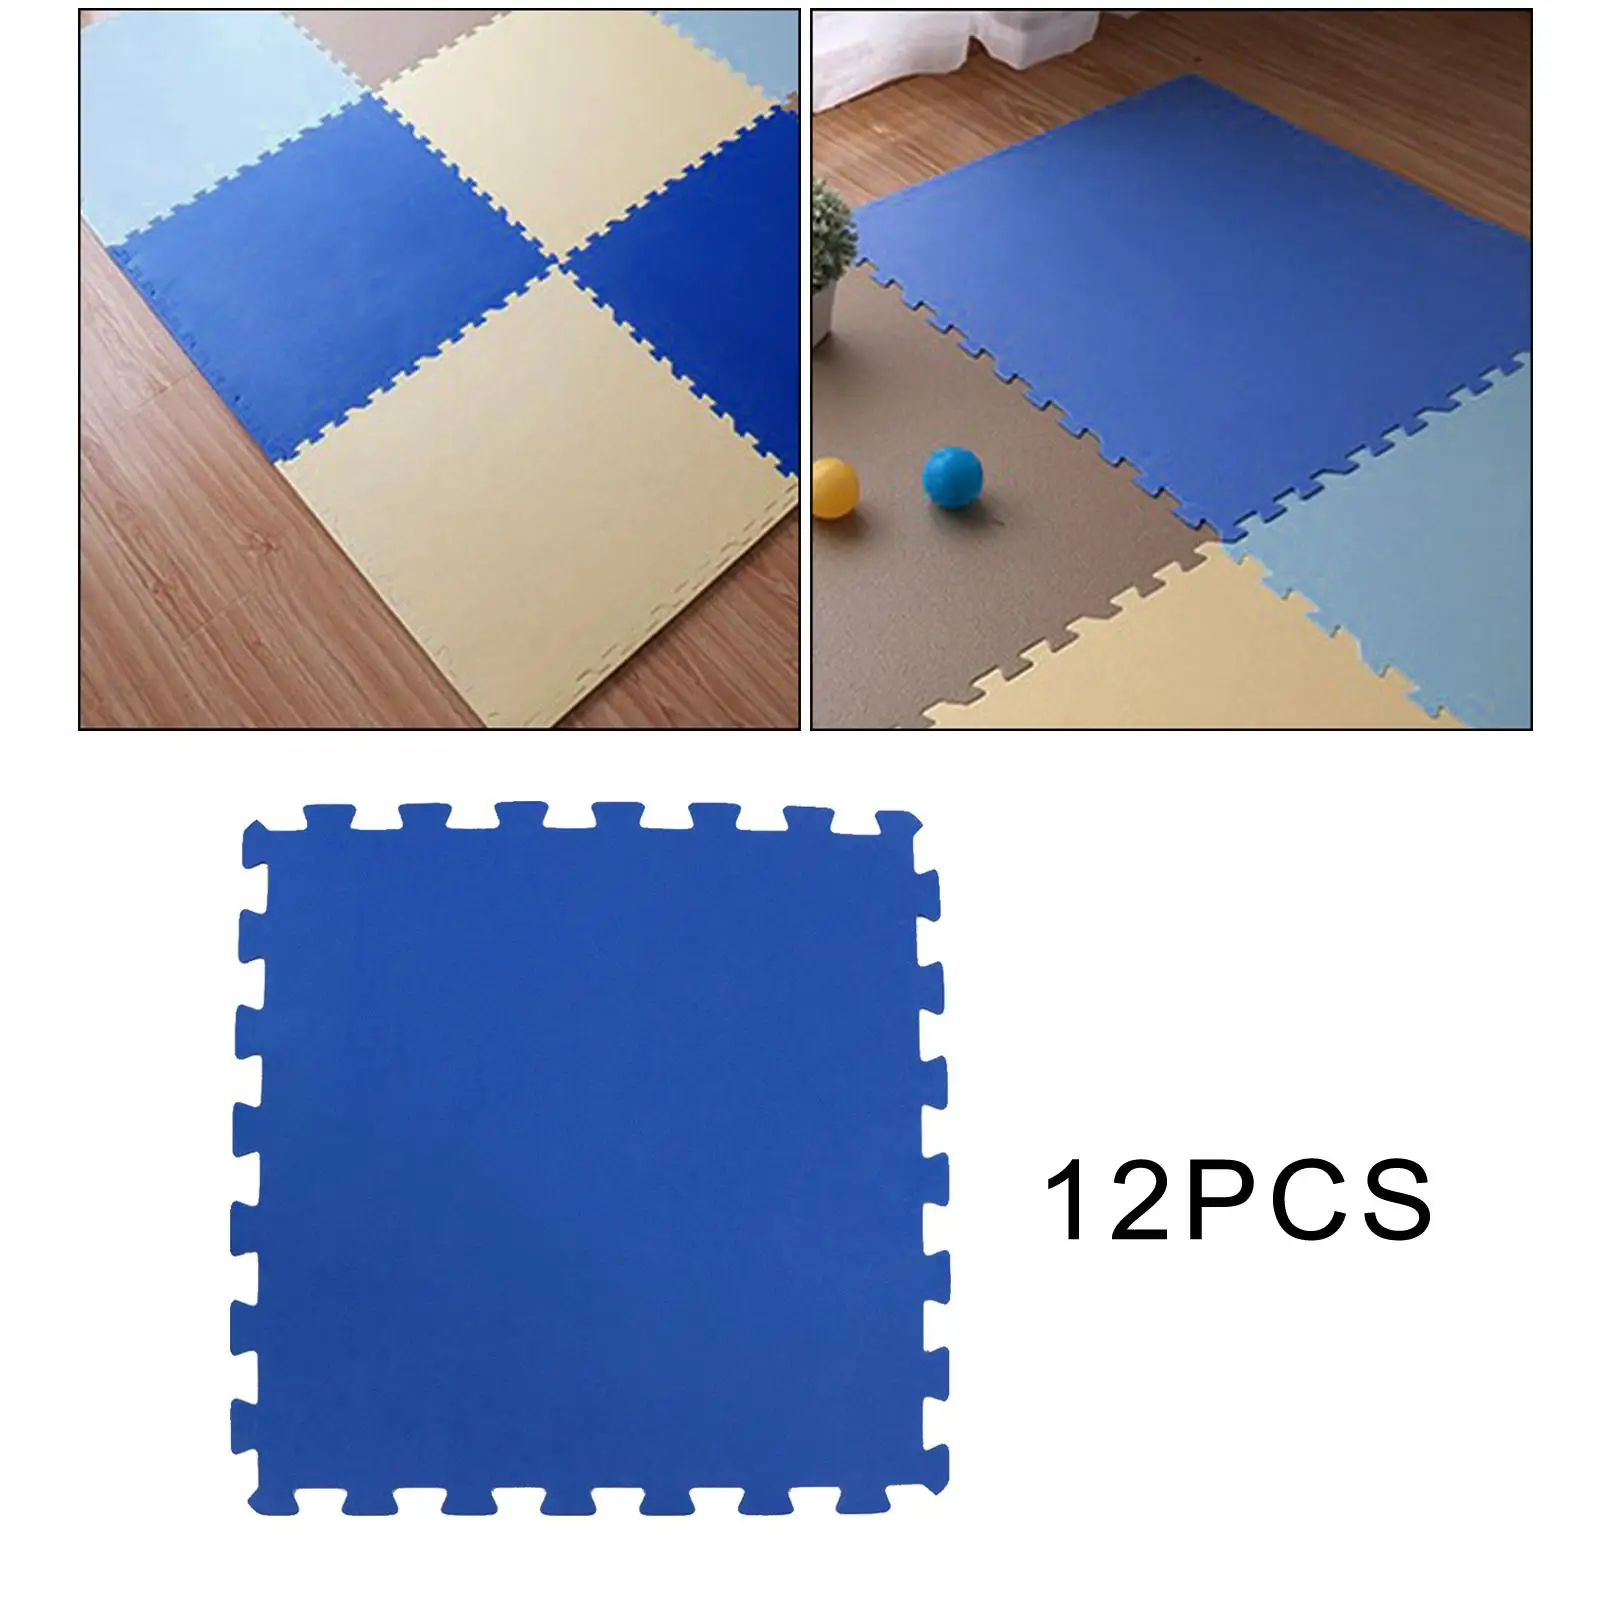 12 Pcs Interlocking Puzzle Mat Waterproof Flooring Padding Tiles Play Mat Baby Crawling Pad 50x50cm, Blue